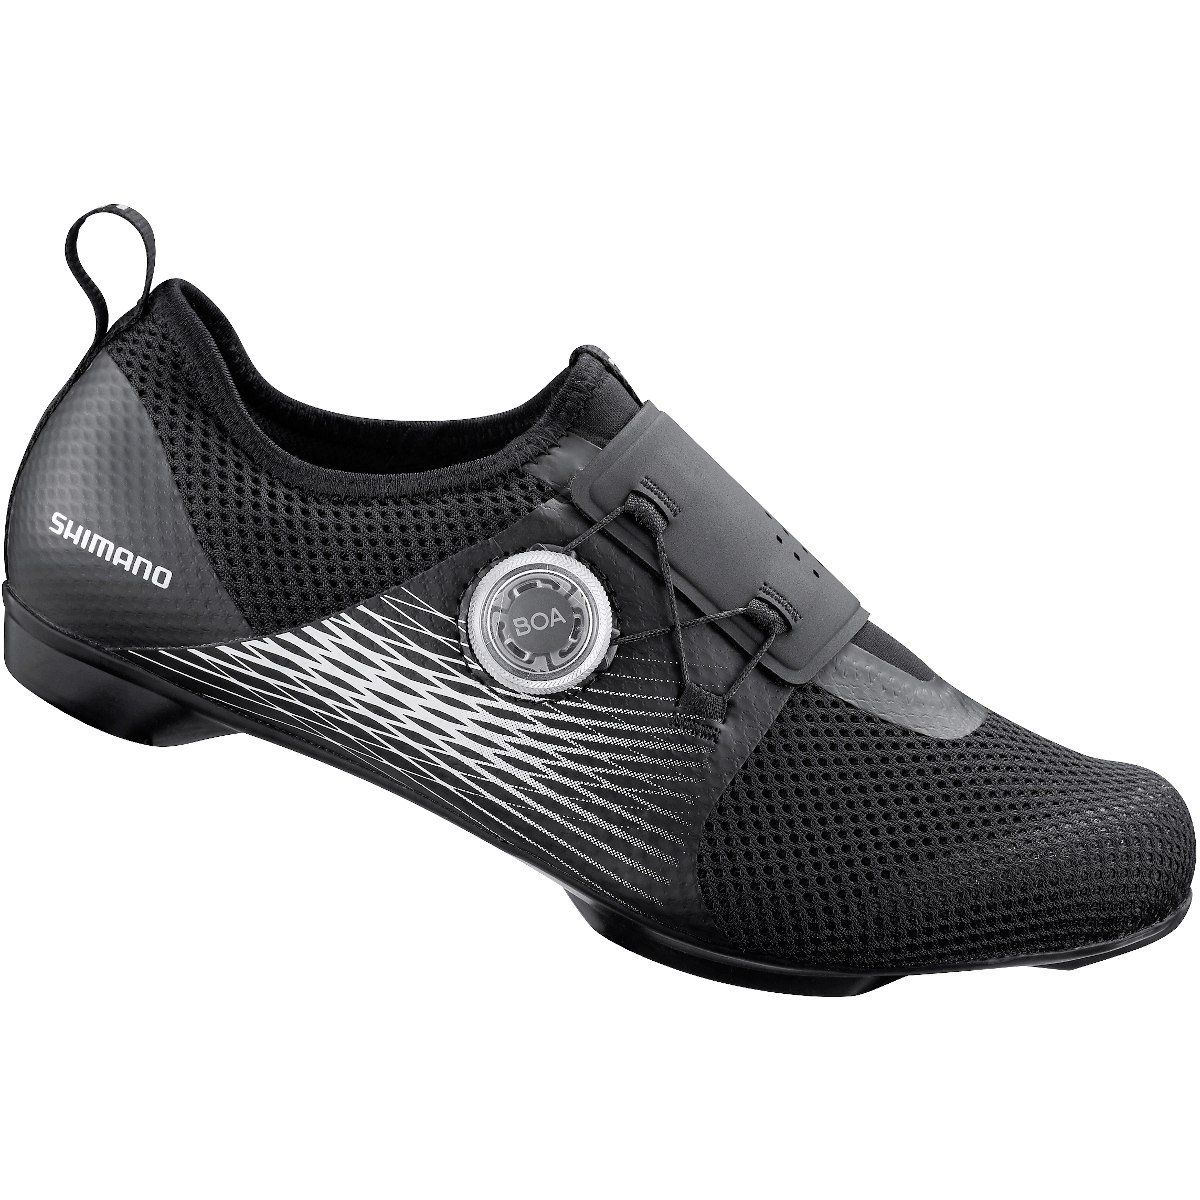 Produktbild von Shimano SH-IC500 Indoor Damenradschuh - black